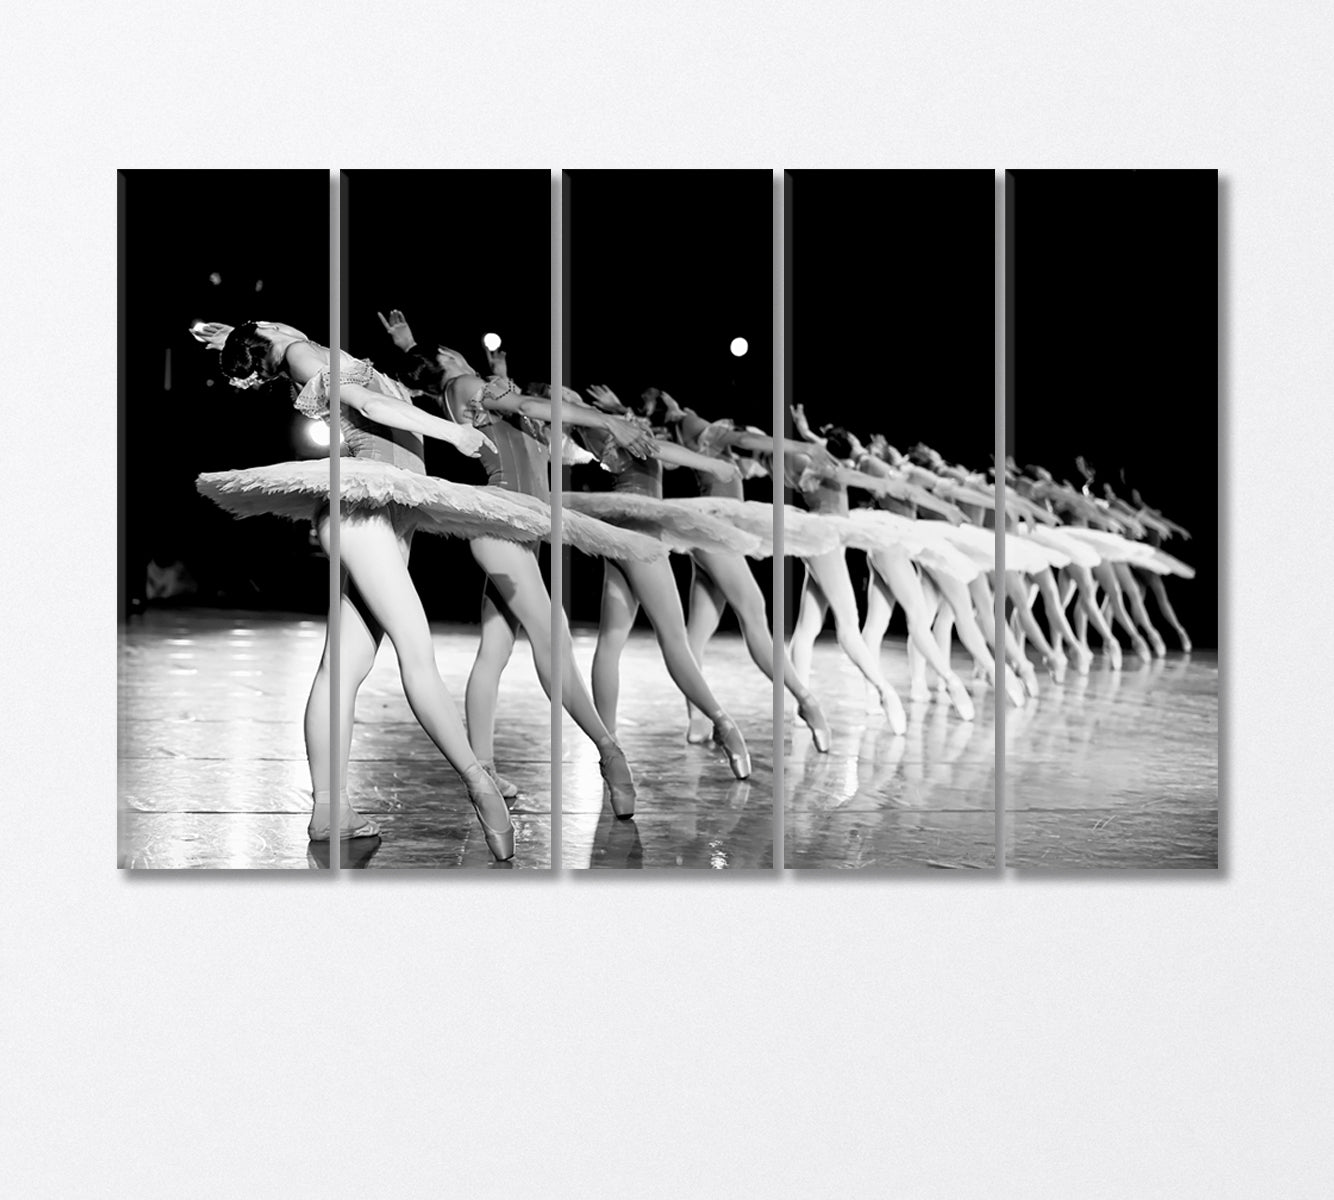 Graceful Ballet Dancers on Stage Canvas Print-Canvas Print-CetArt-5 Panels-36x24 inches-CetArt